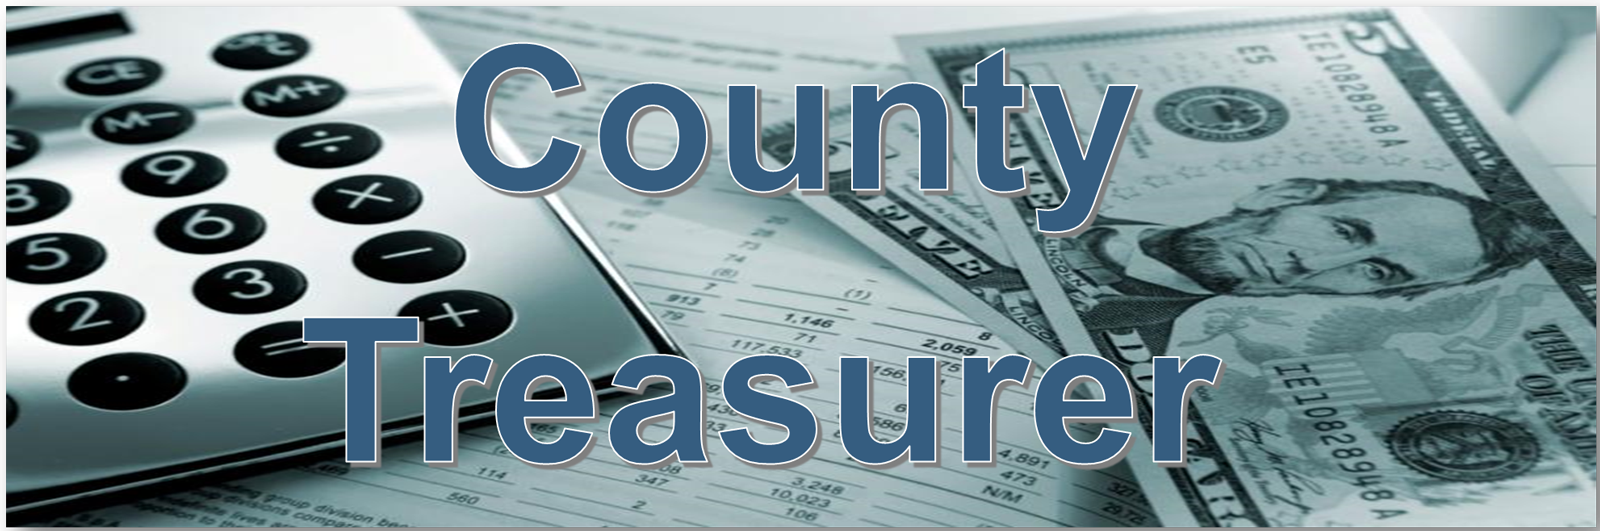 Graphic for Columbia County Treasurer Website